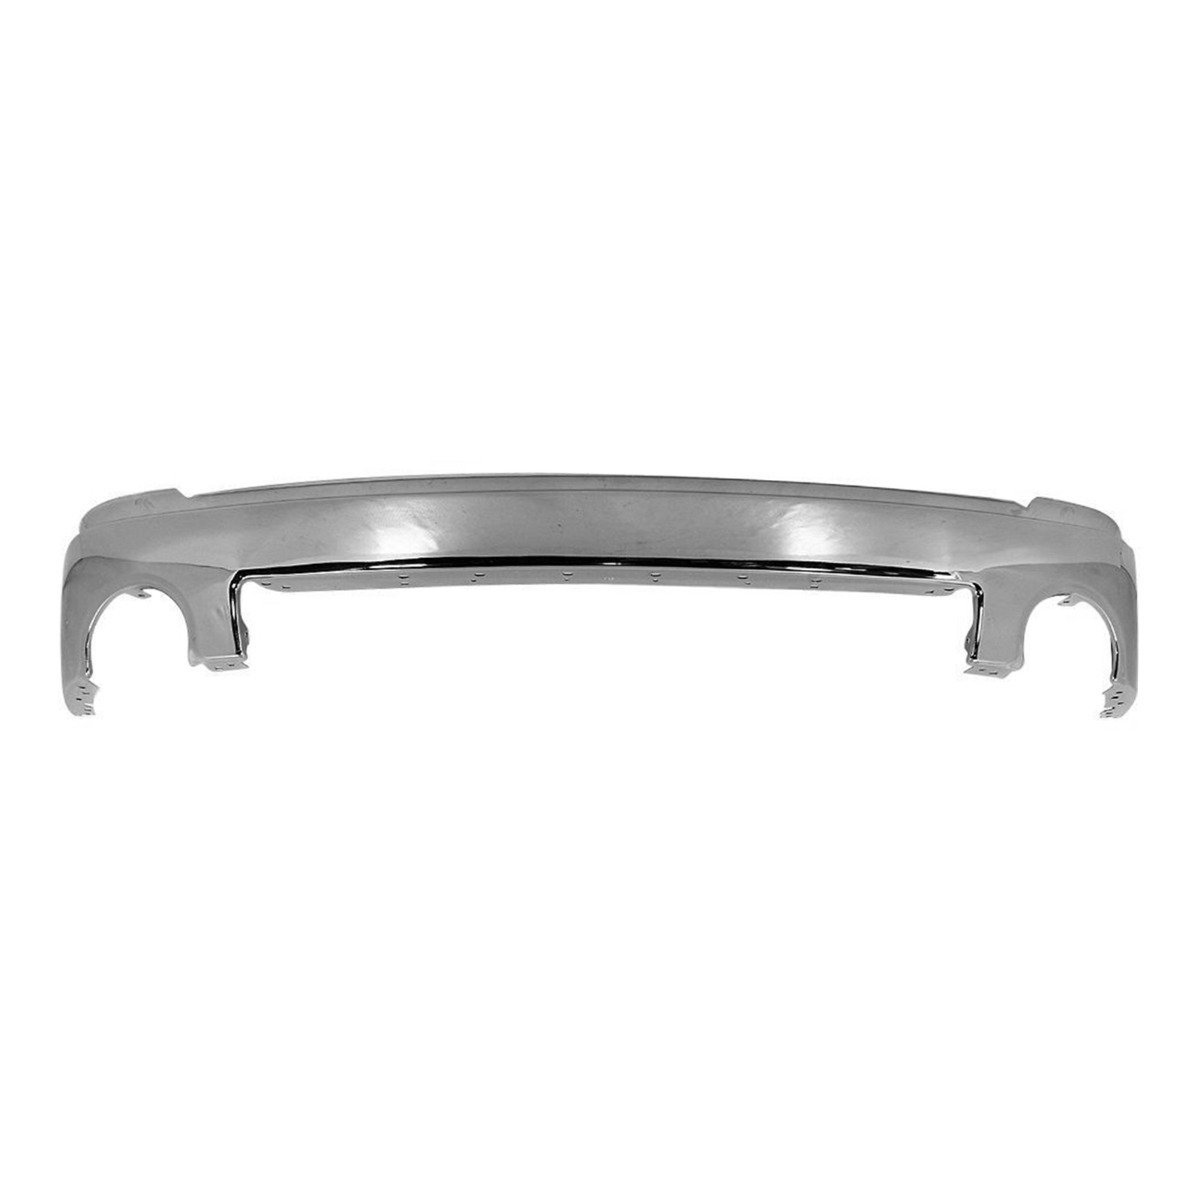 NEW Steel Chrome Front Bumper Face Bar for 2007-2013 GMC Sierra 1500 Series  GM1002833